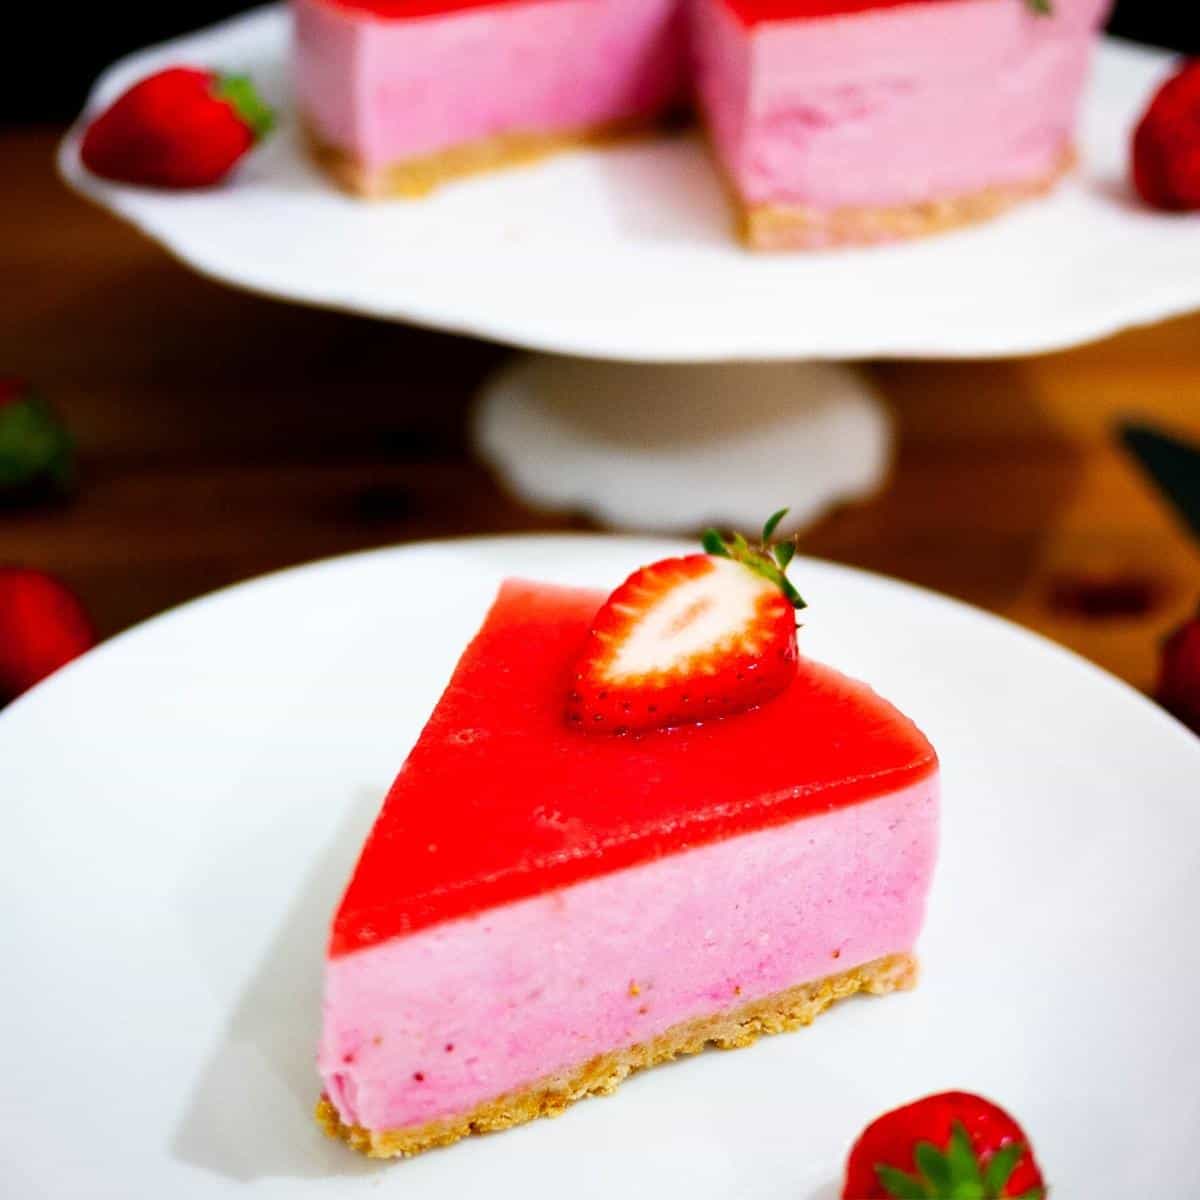 A slice of Bavarian Cream Cake with strawberry jello.